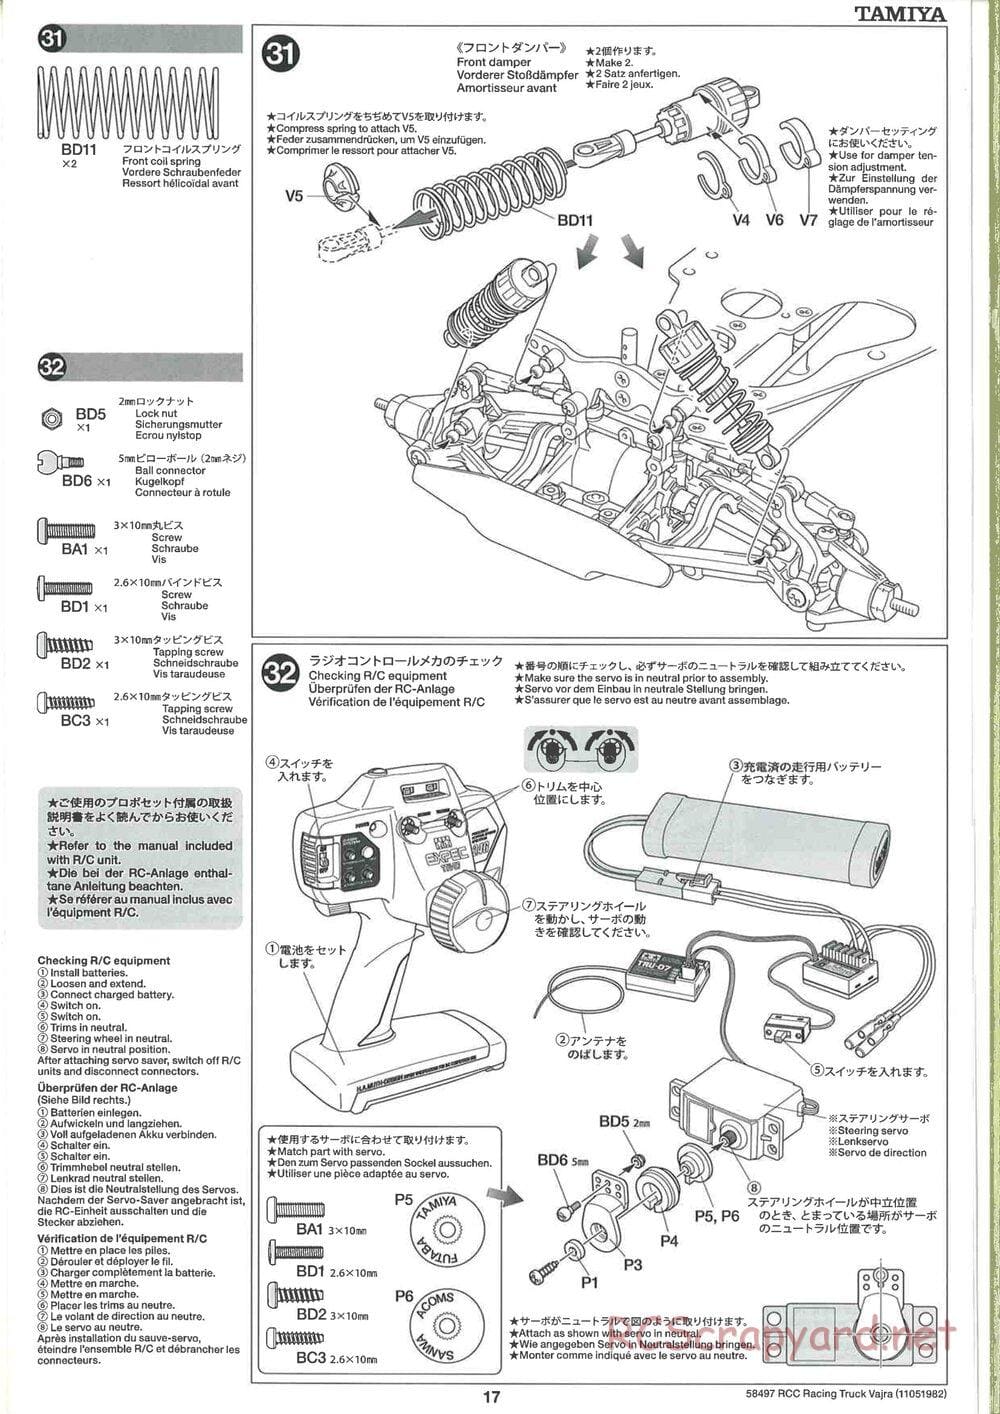 Tamiya - Vajra - AV Chassis - Manual - Page 17